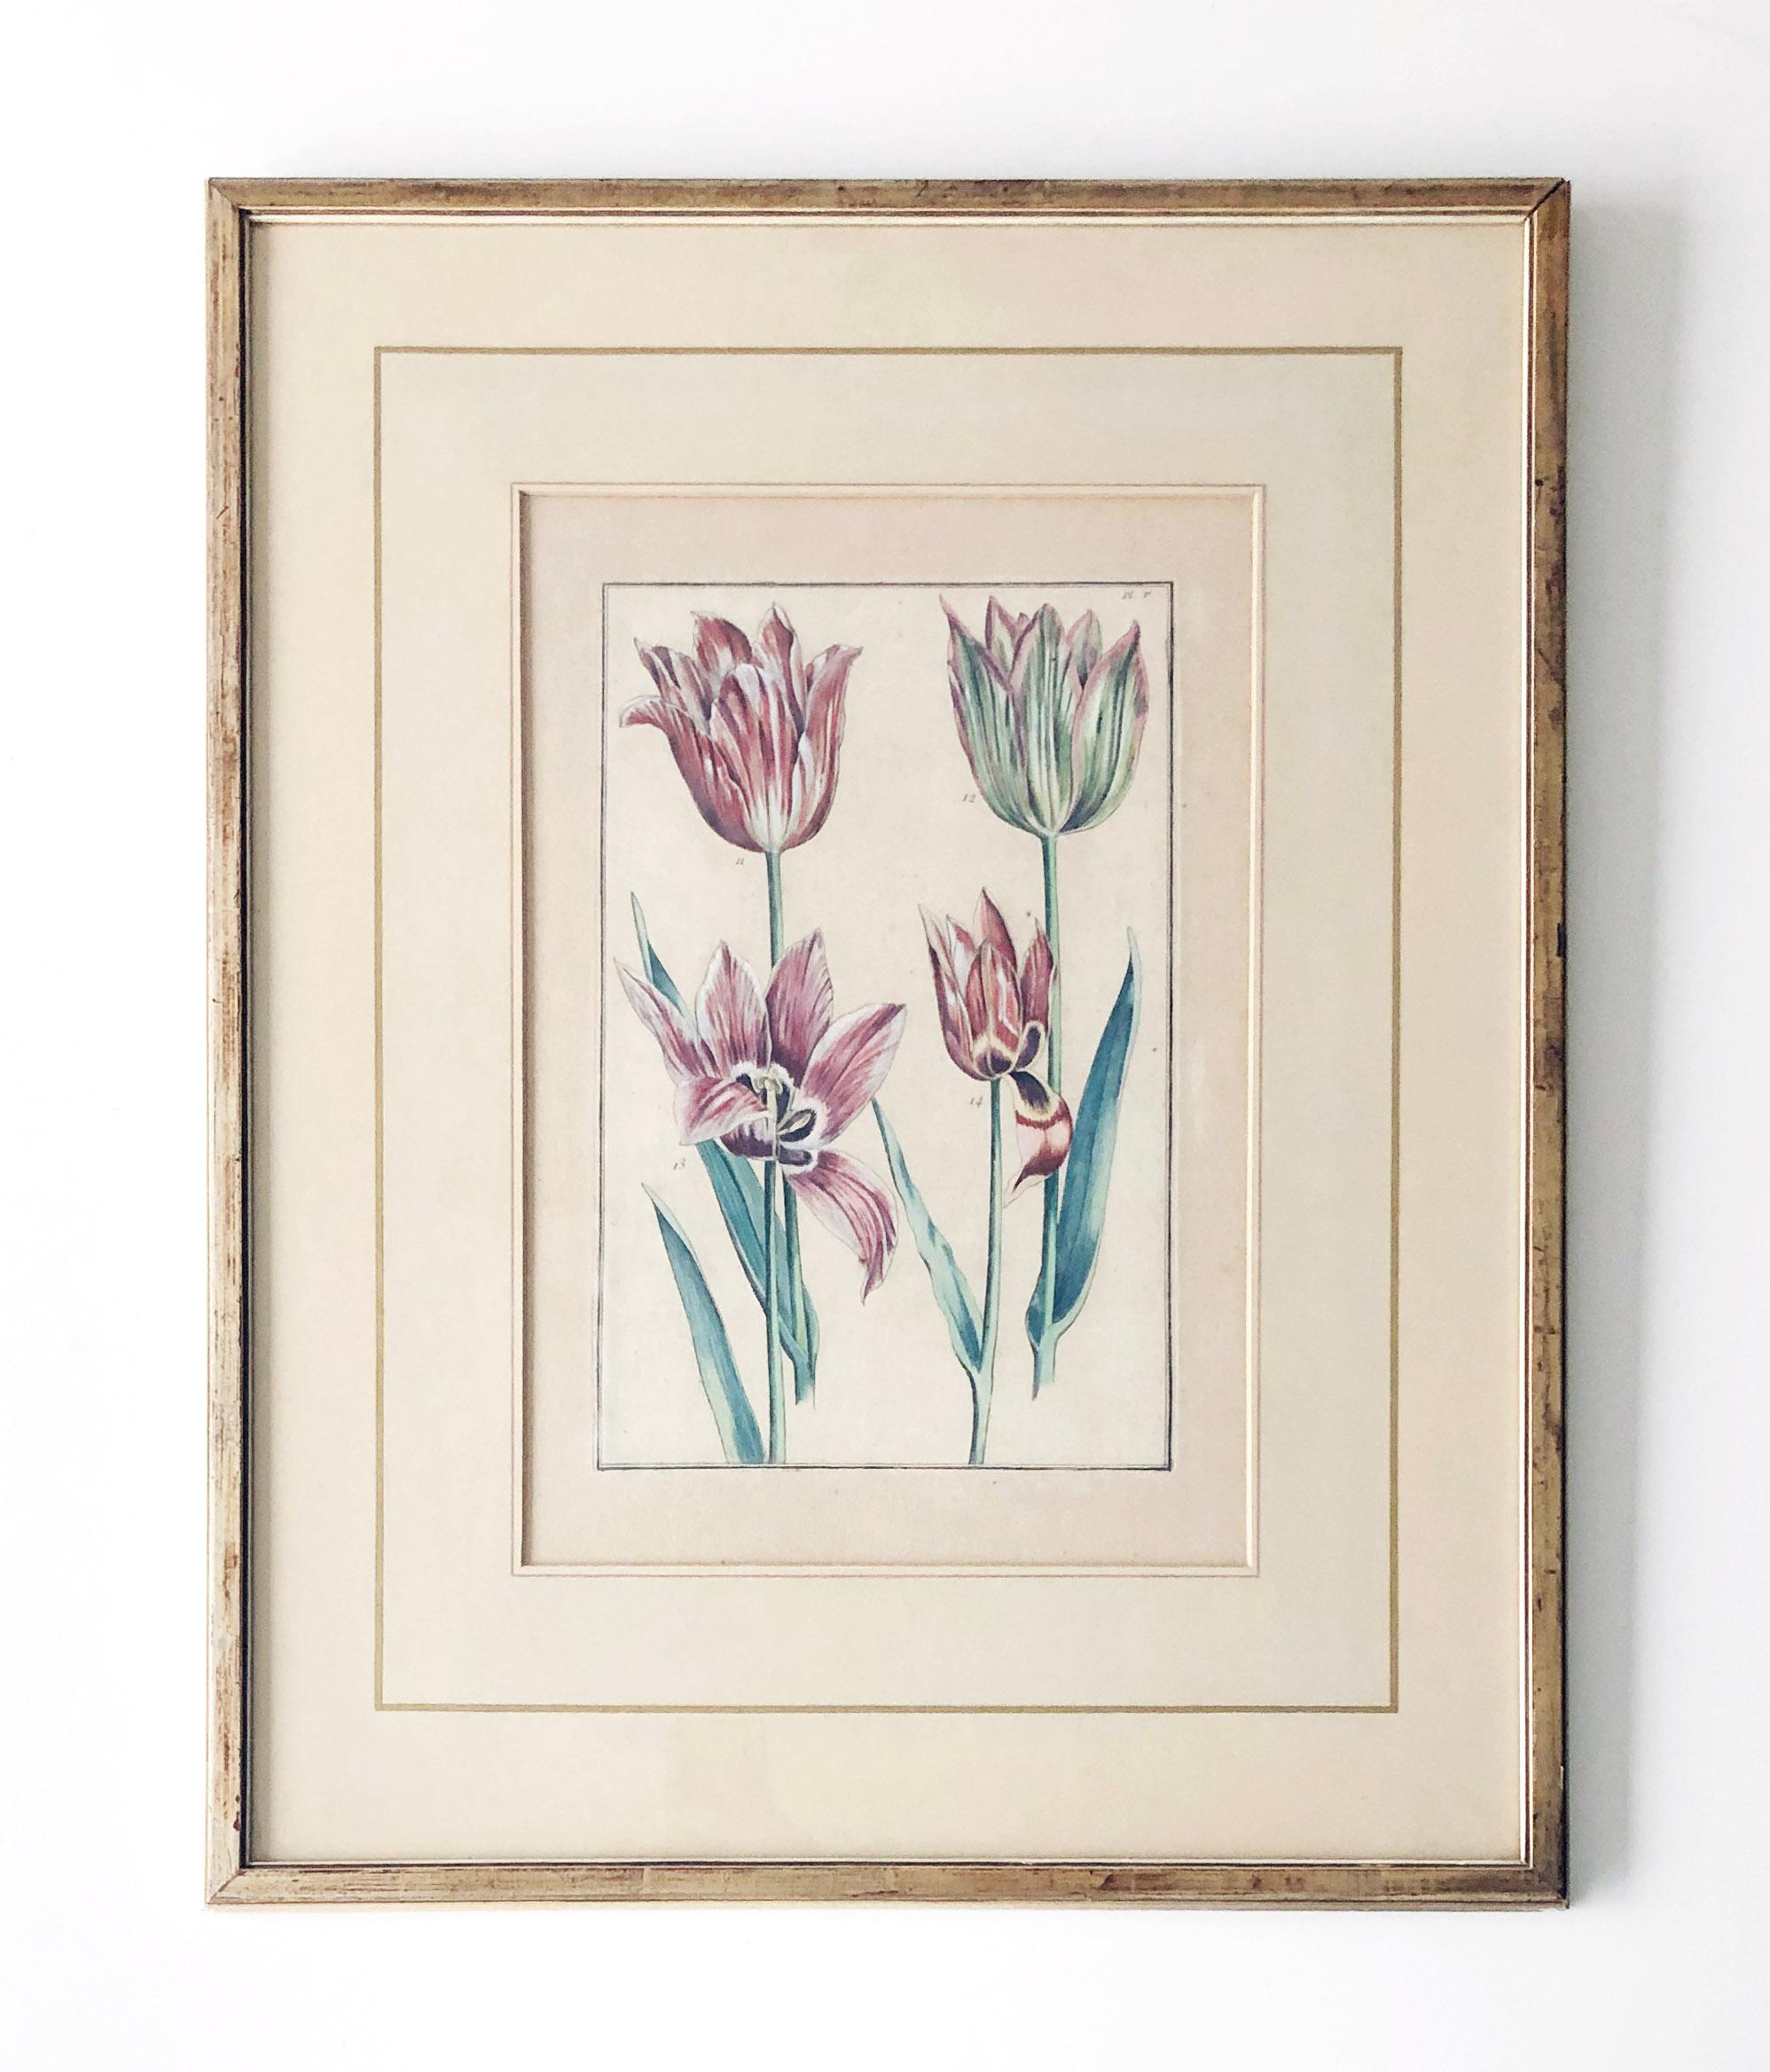 Other Emanuel Sweert - Maria Merian - Daniel Rabel - Copper engraving 4 tulips plate 5 For Sale